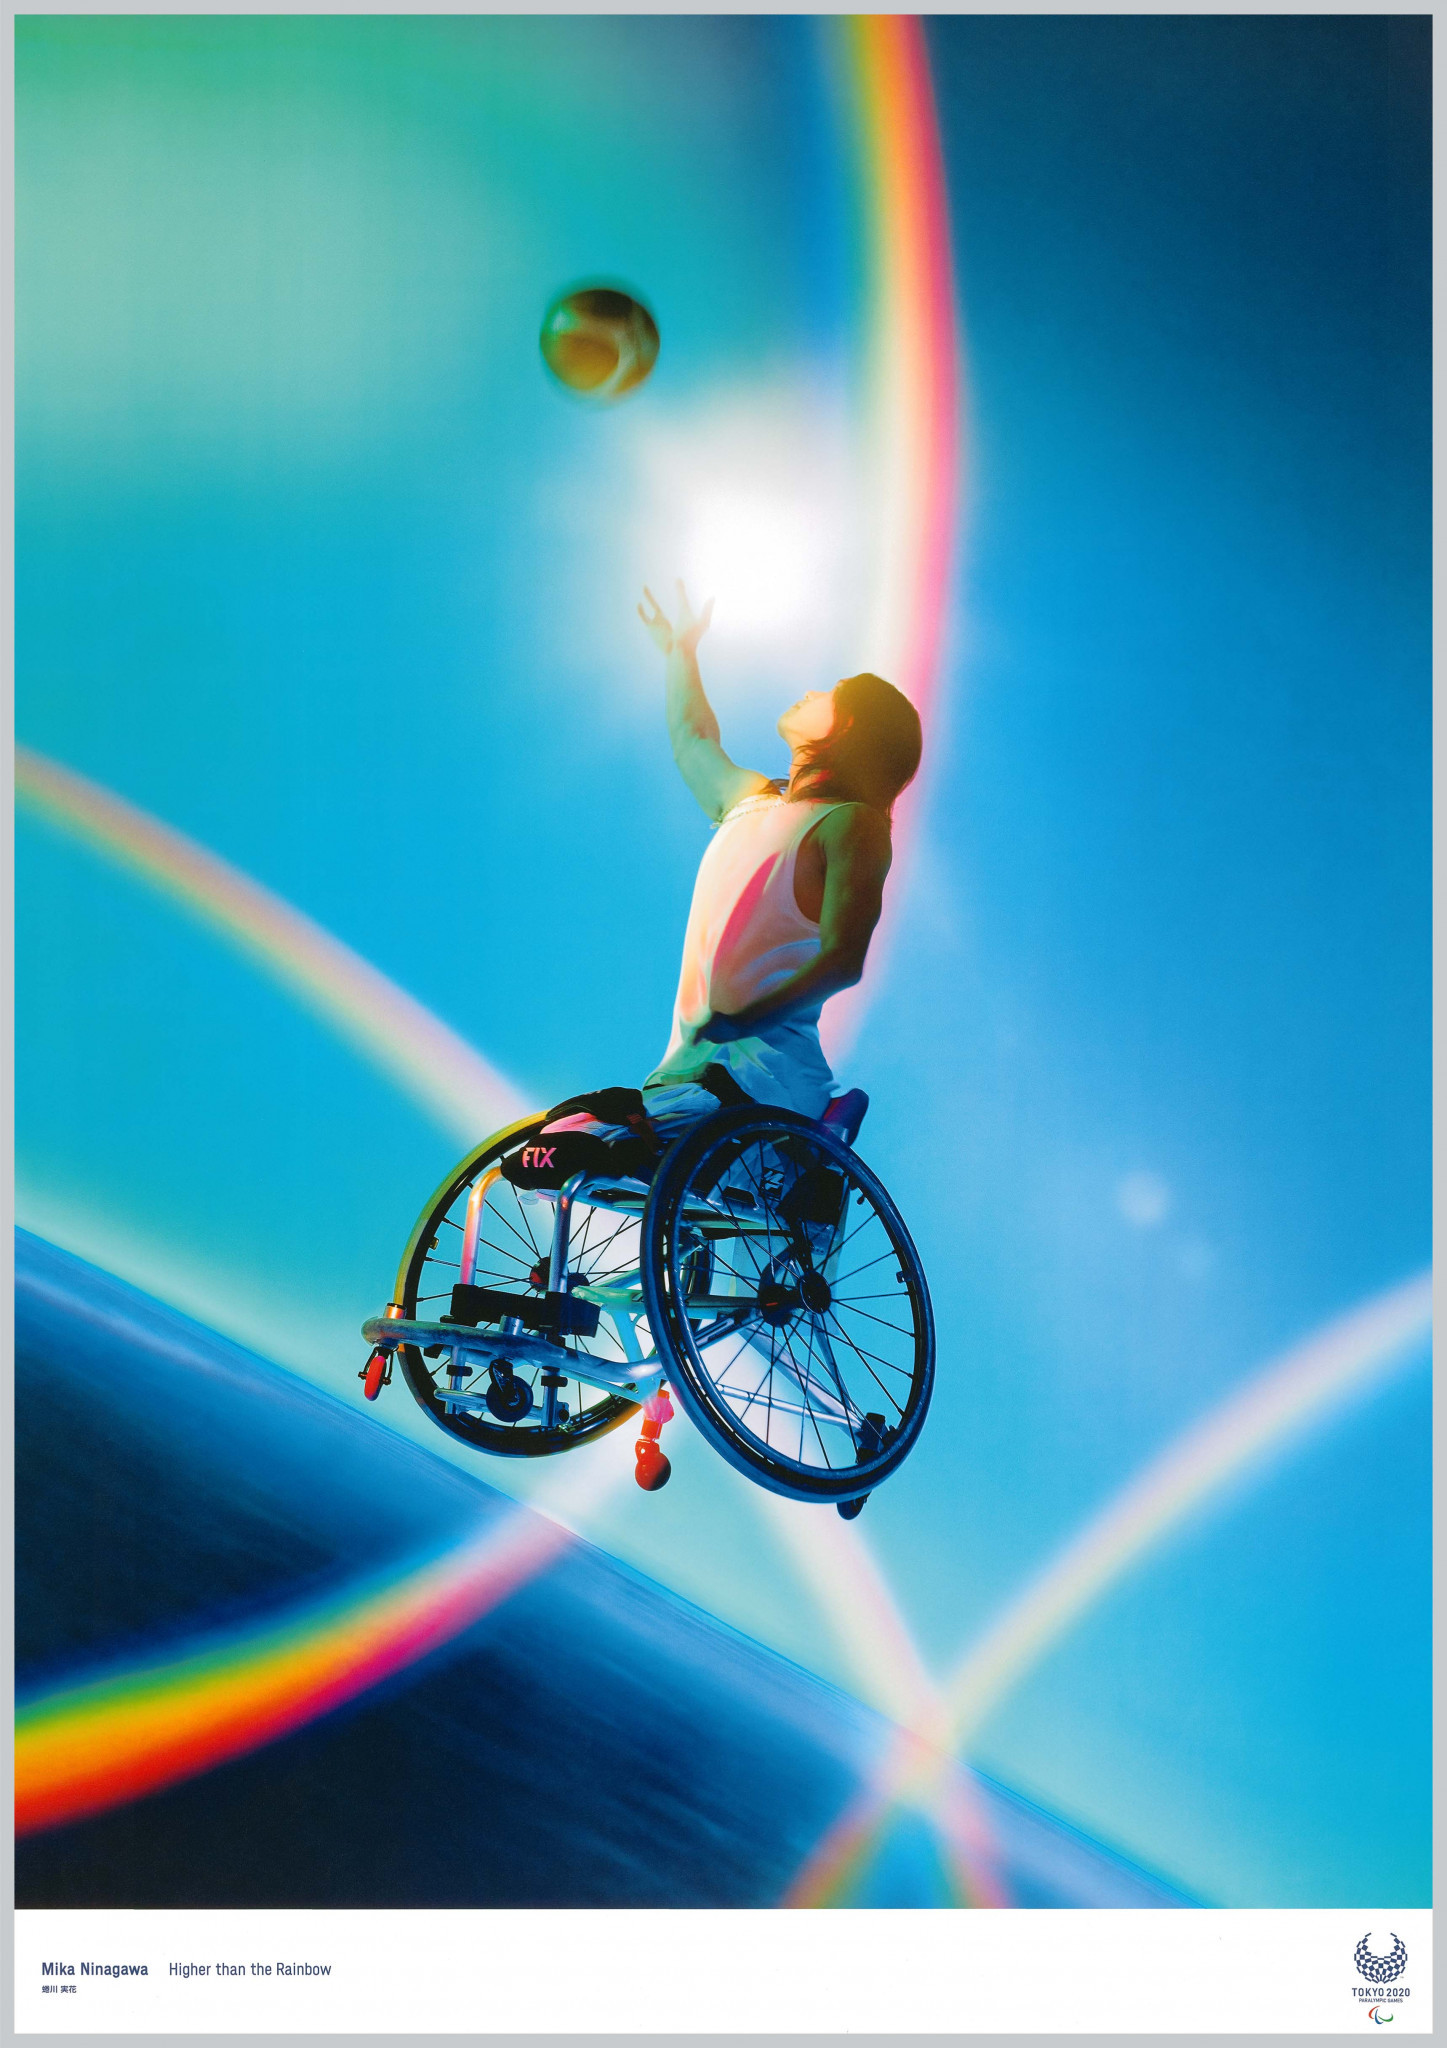 Higher than the Rainbow by Mika Ninagawa  ©Tokyo 2020